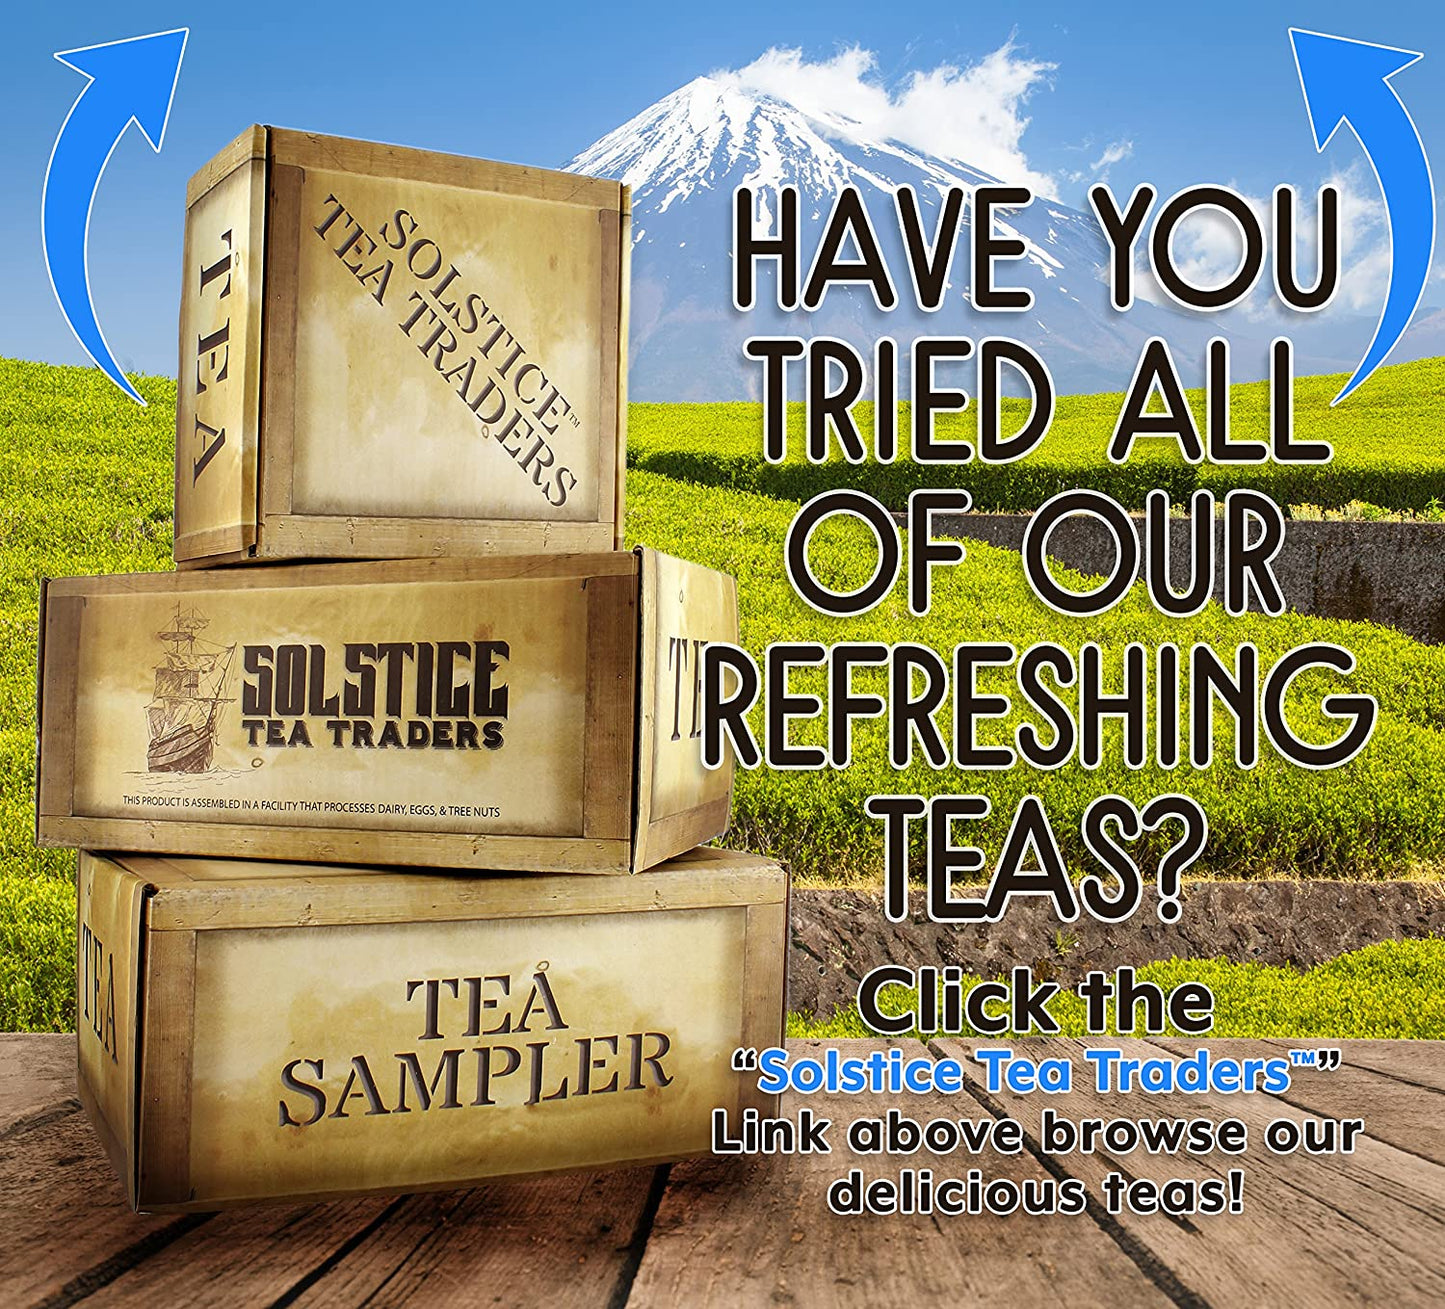 China Pan-Fired Green Tea